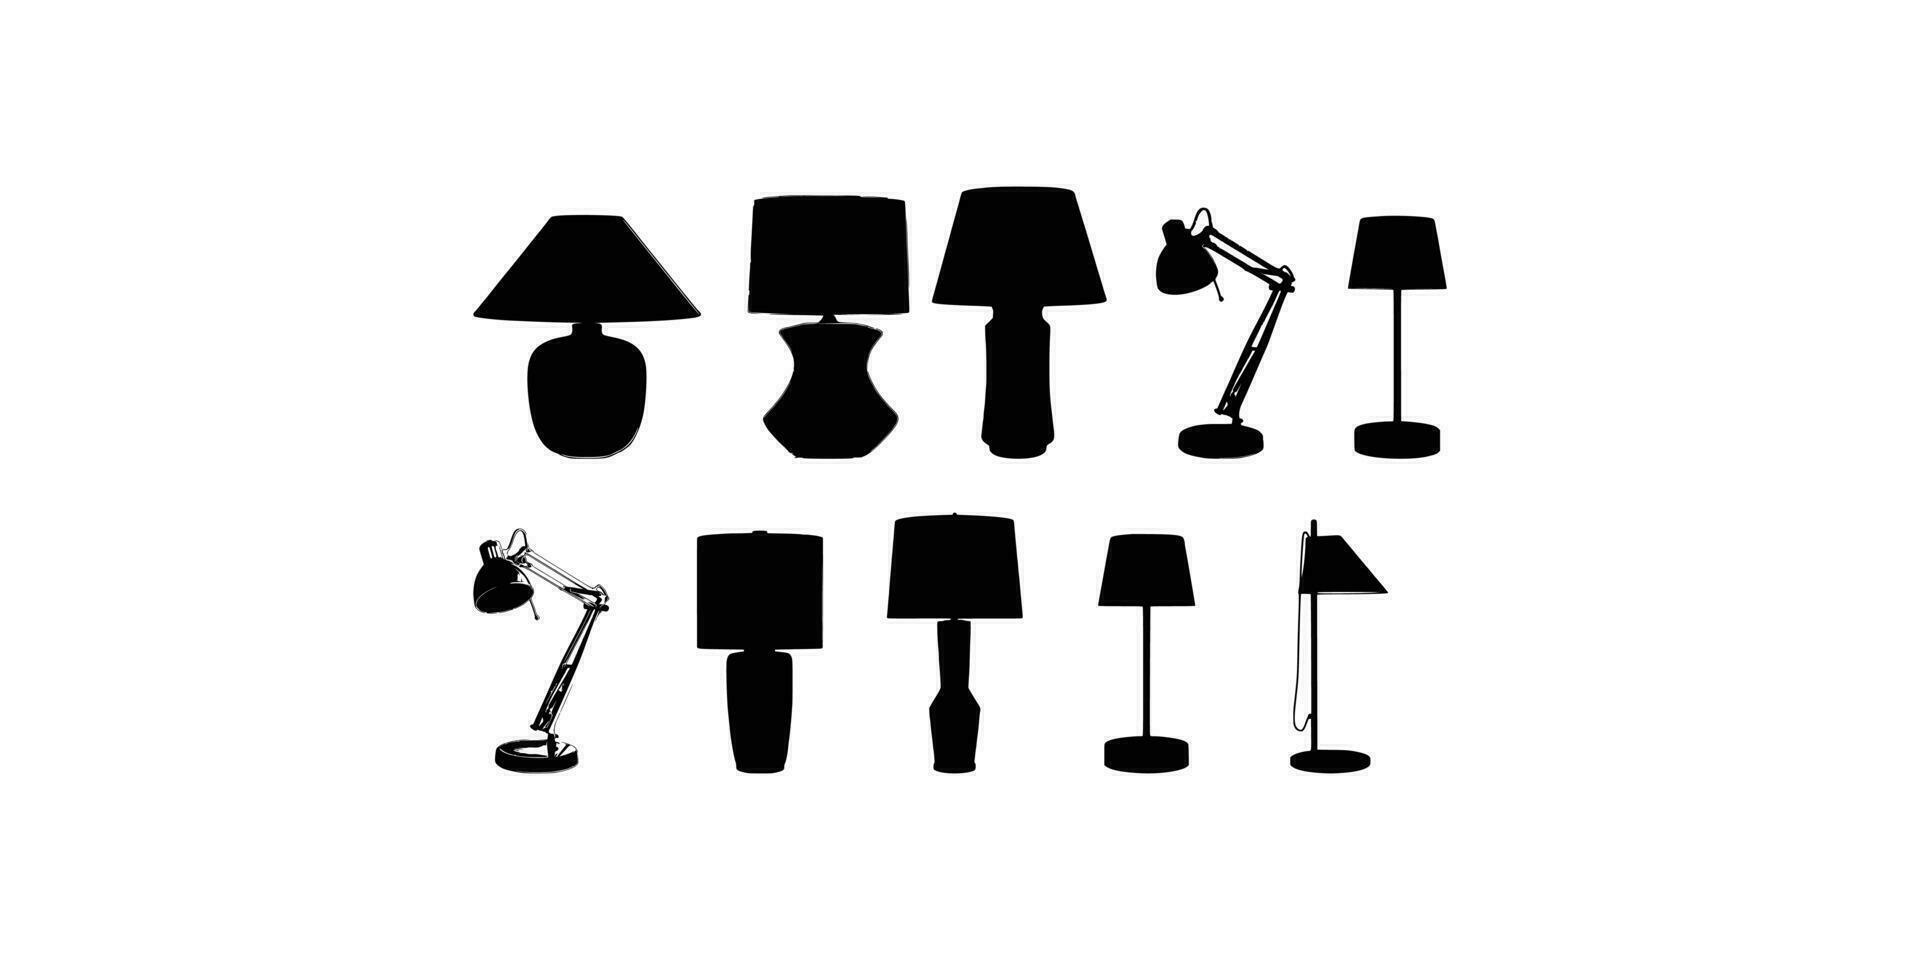 tien tafel licht silhouet, lampen vlak stijl vector illustratie. zwart licht, lamp silhouet set, lampen set.